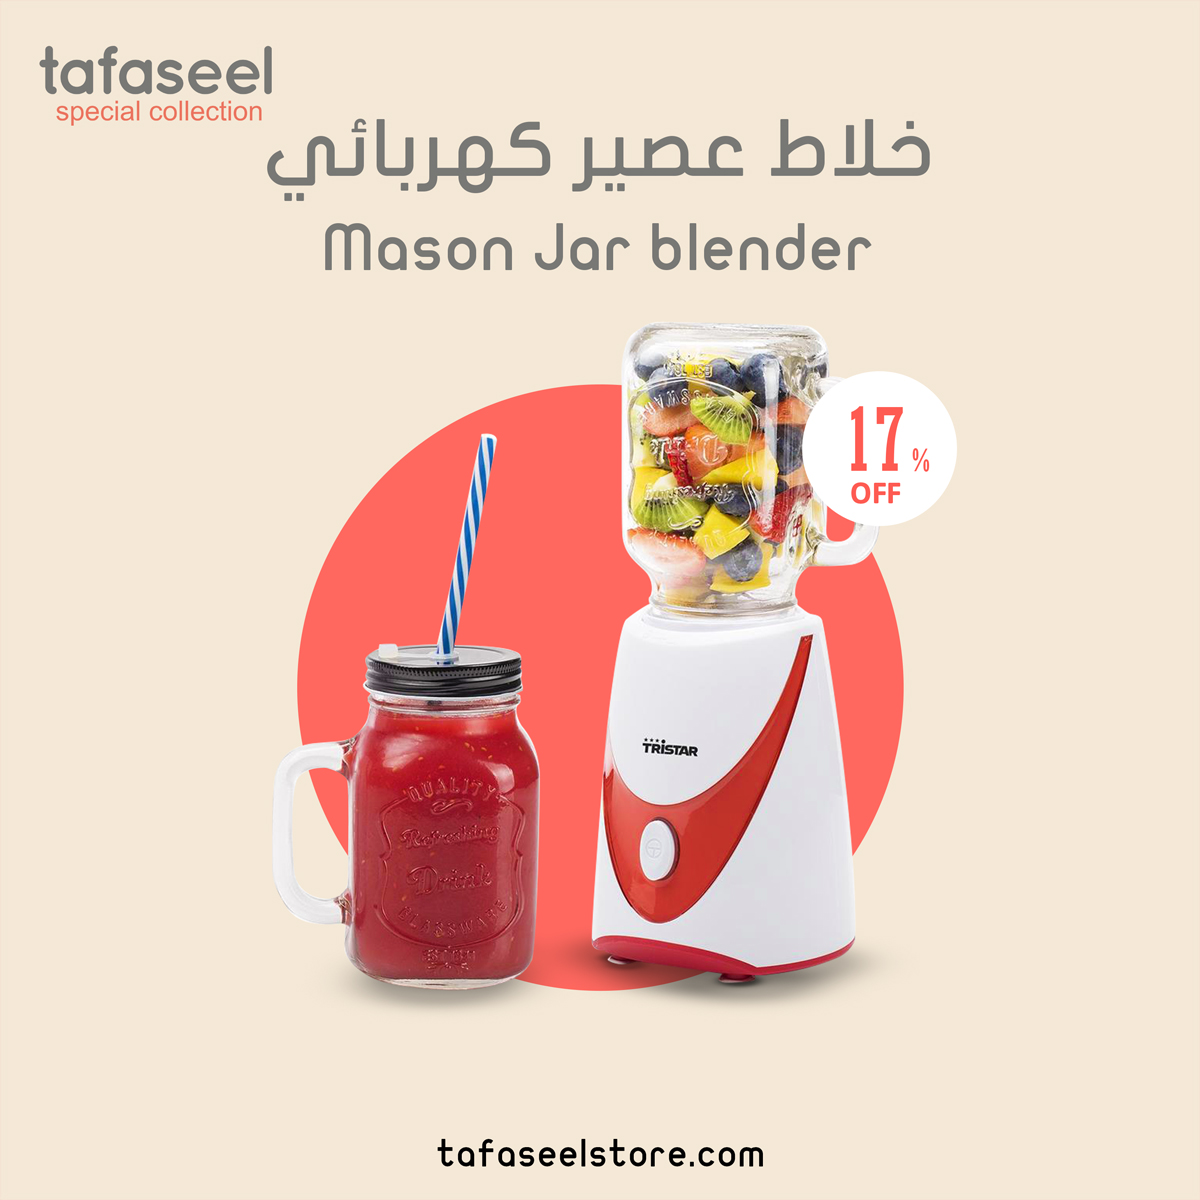 Tristar BL-4456 Mason jar blender 